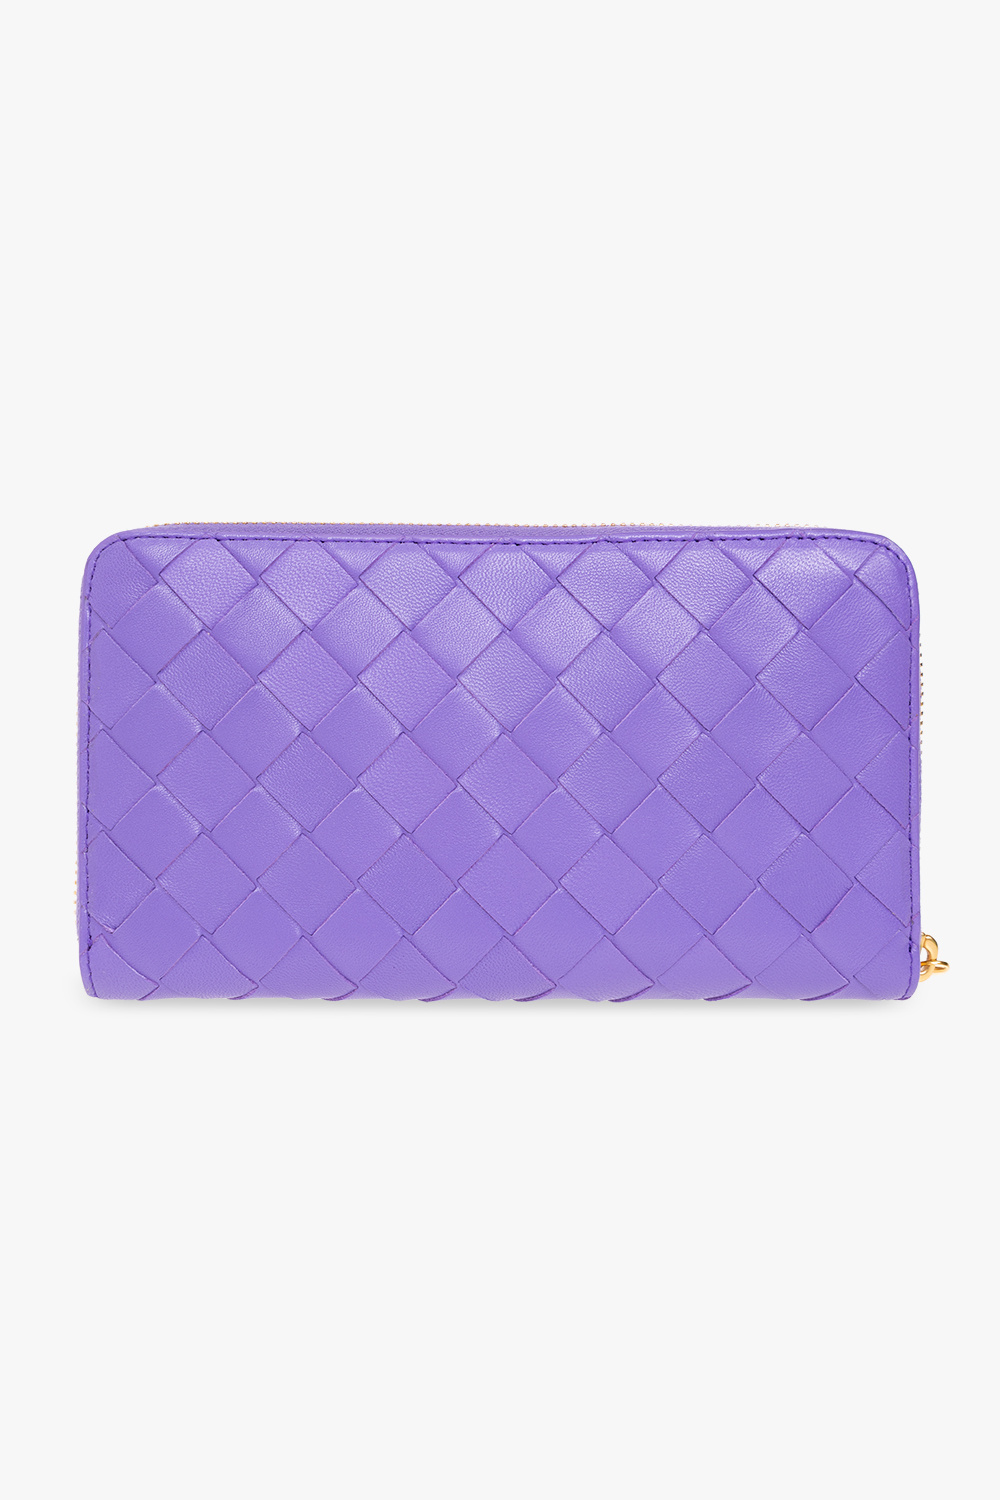 bottega All Veneta Leather wallet with ‘Intrecciato’ weave